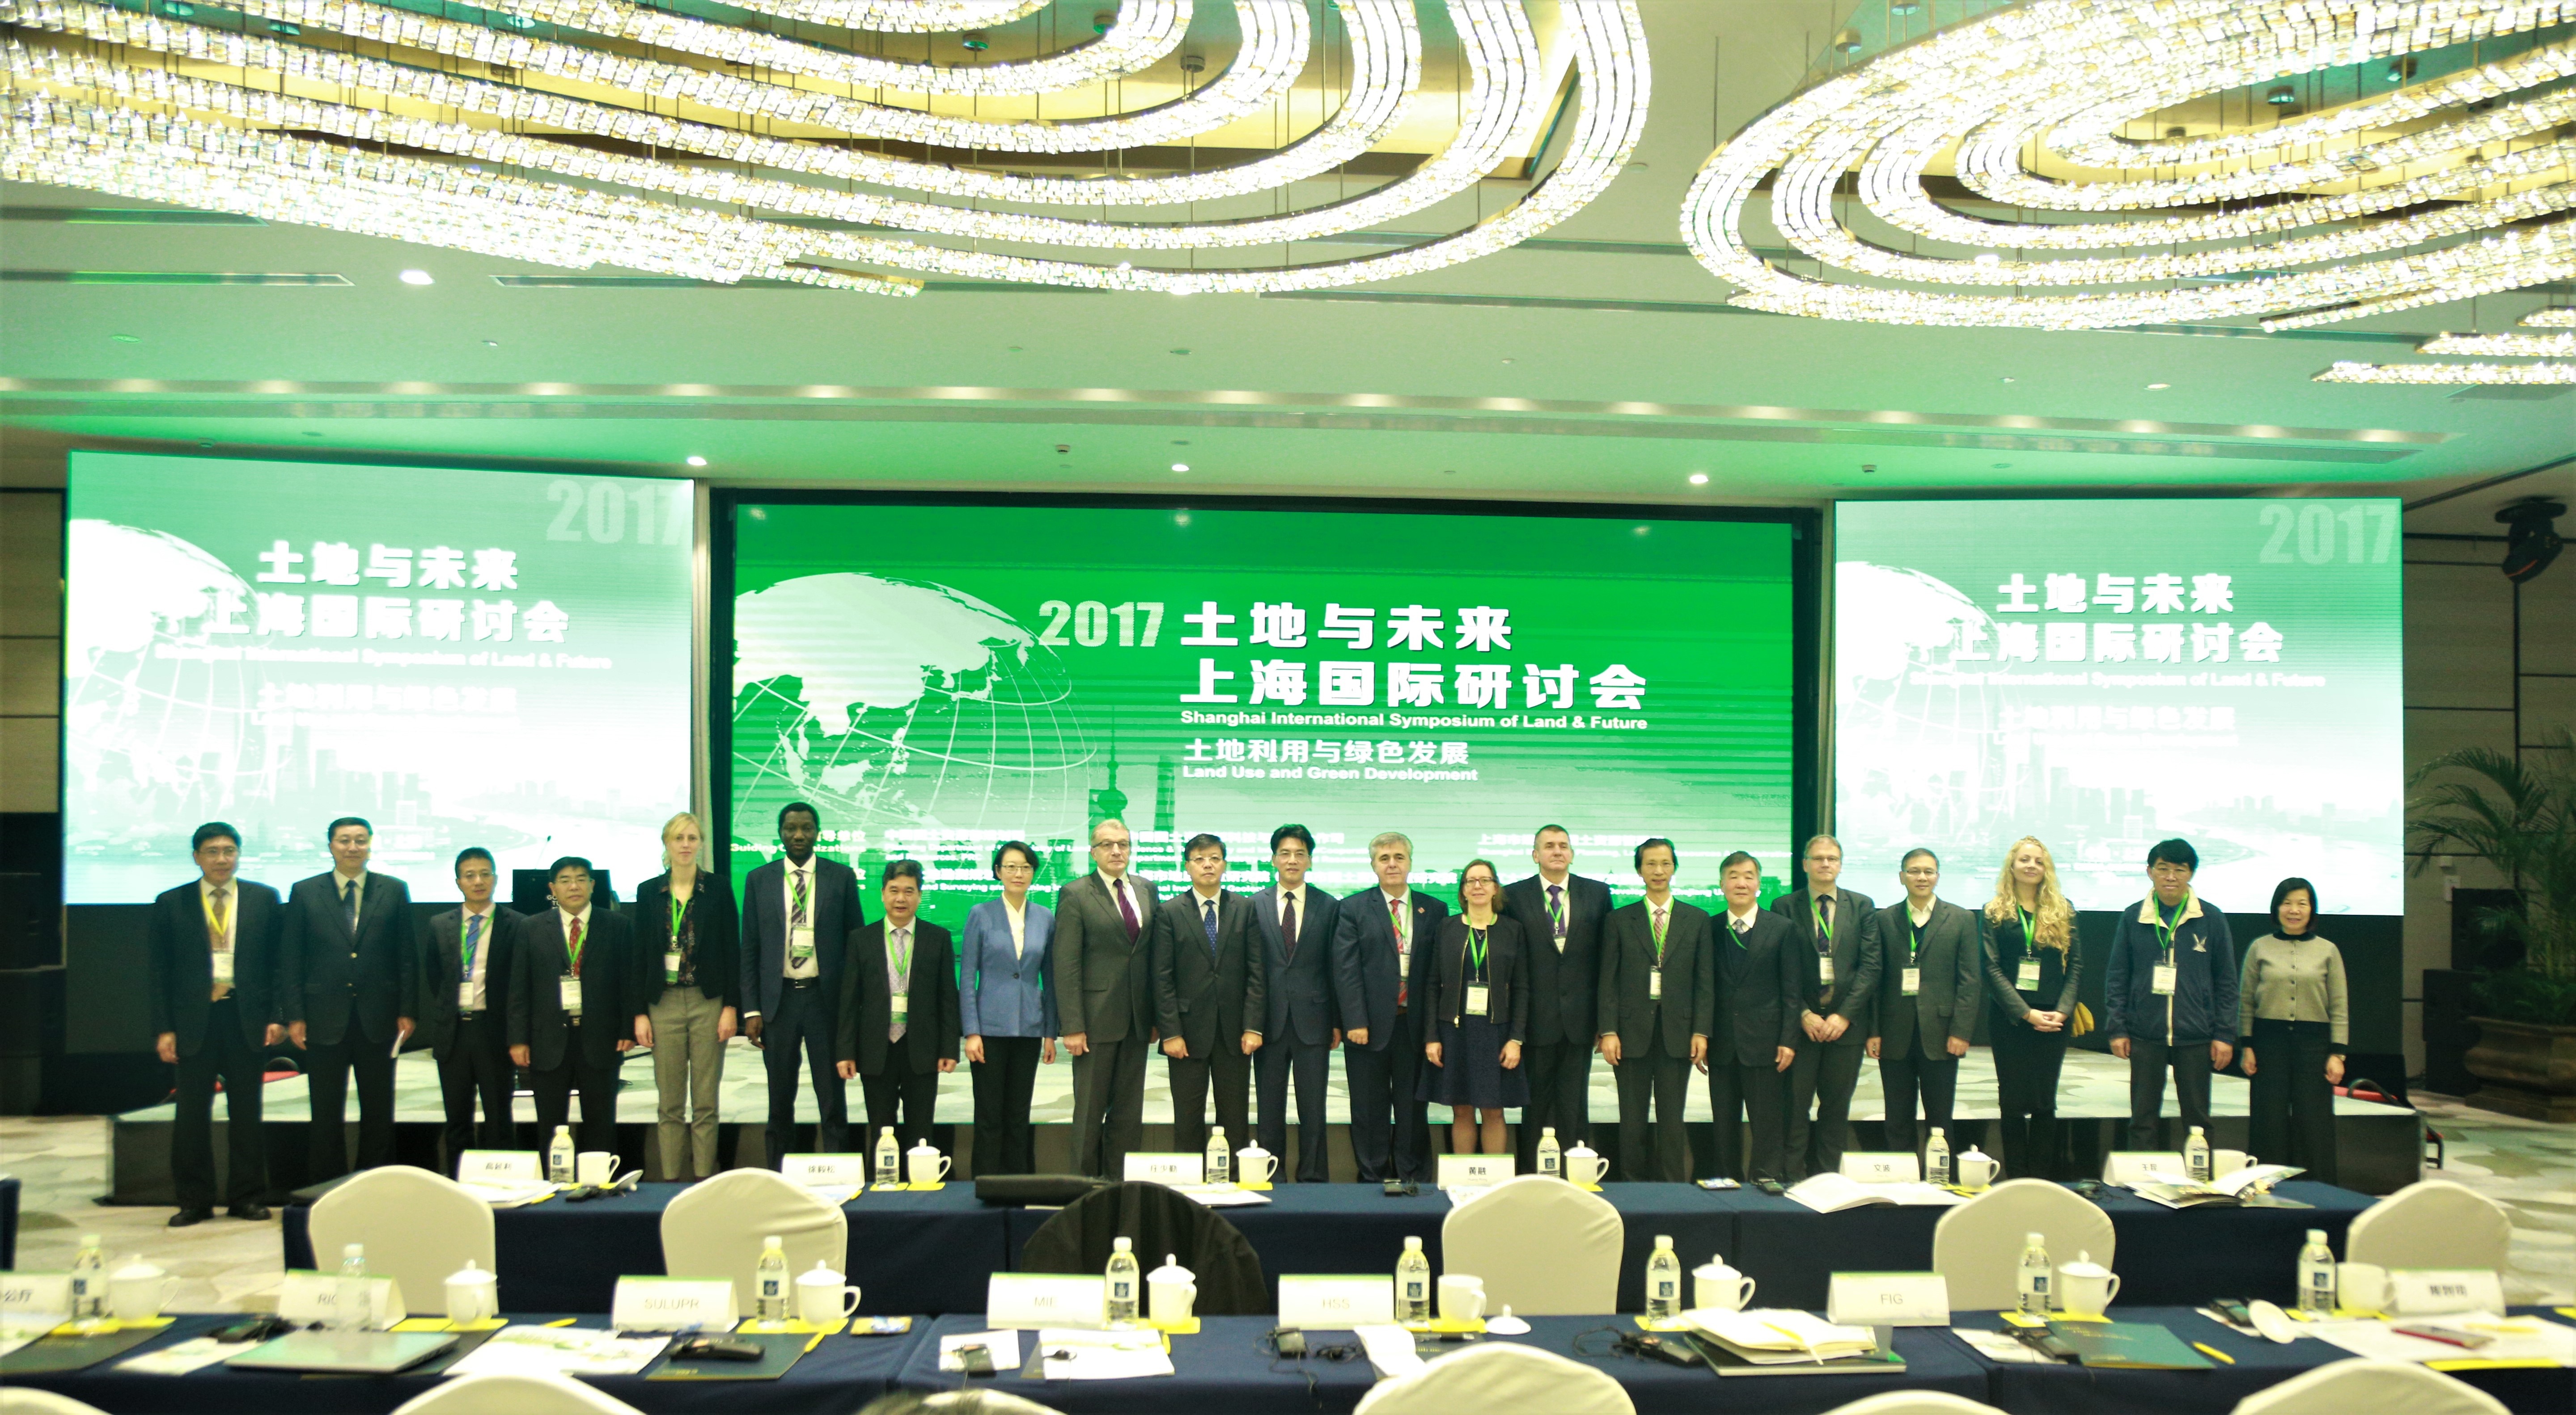 Alexander Sagaydak among distinguished guests of 2017 Shanghai Land and Future Conference, China&nbsp;